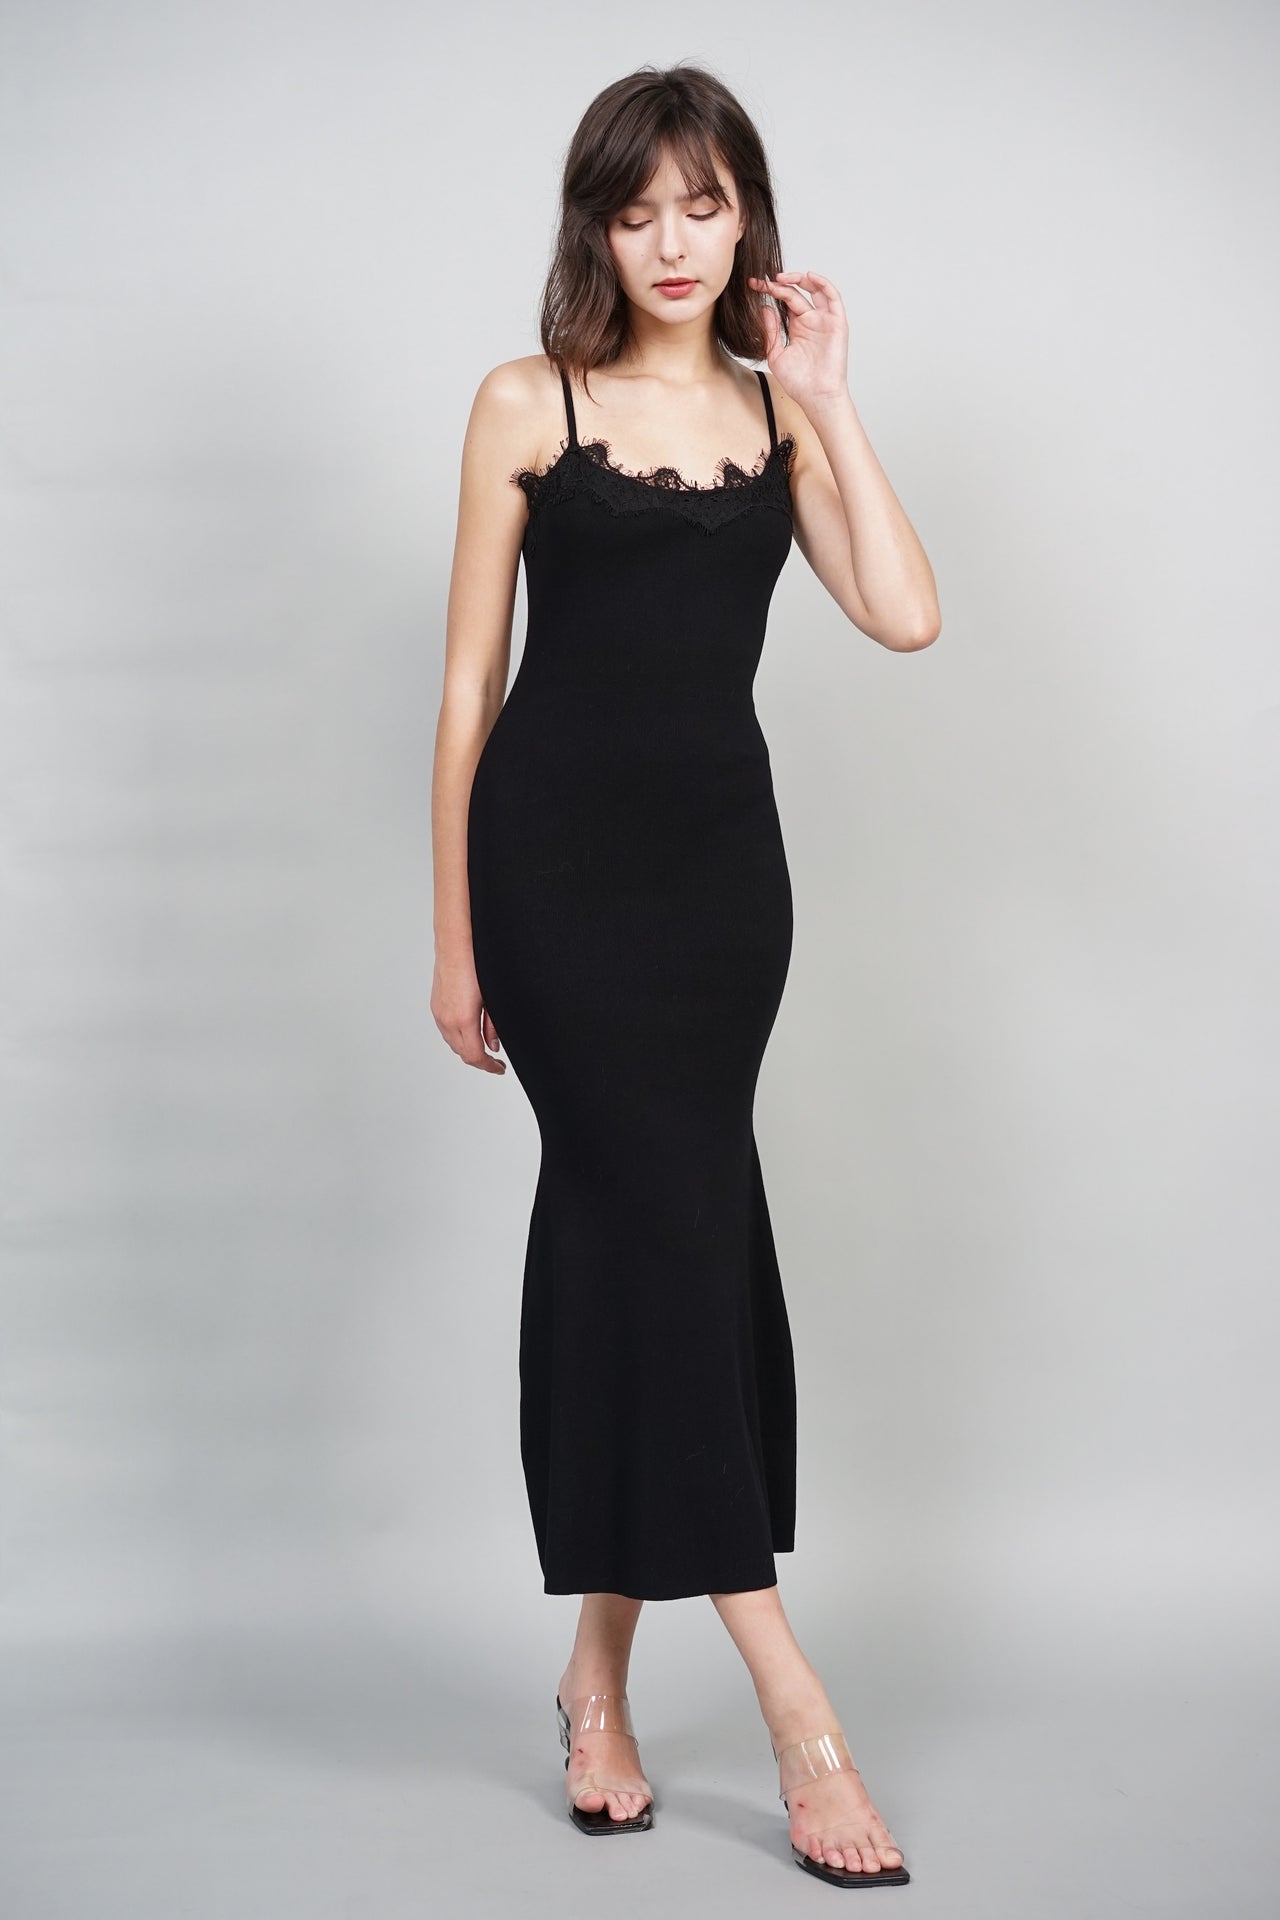 EVERYDAY / Valira Cami Lace Dress in Black